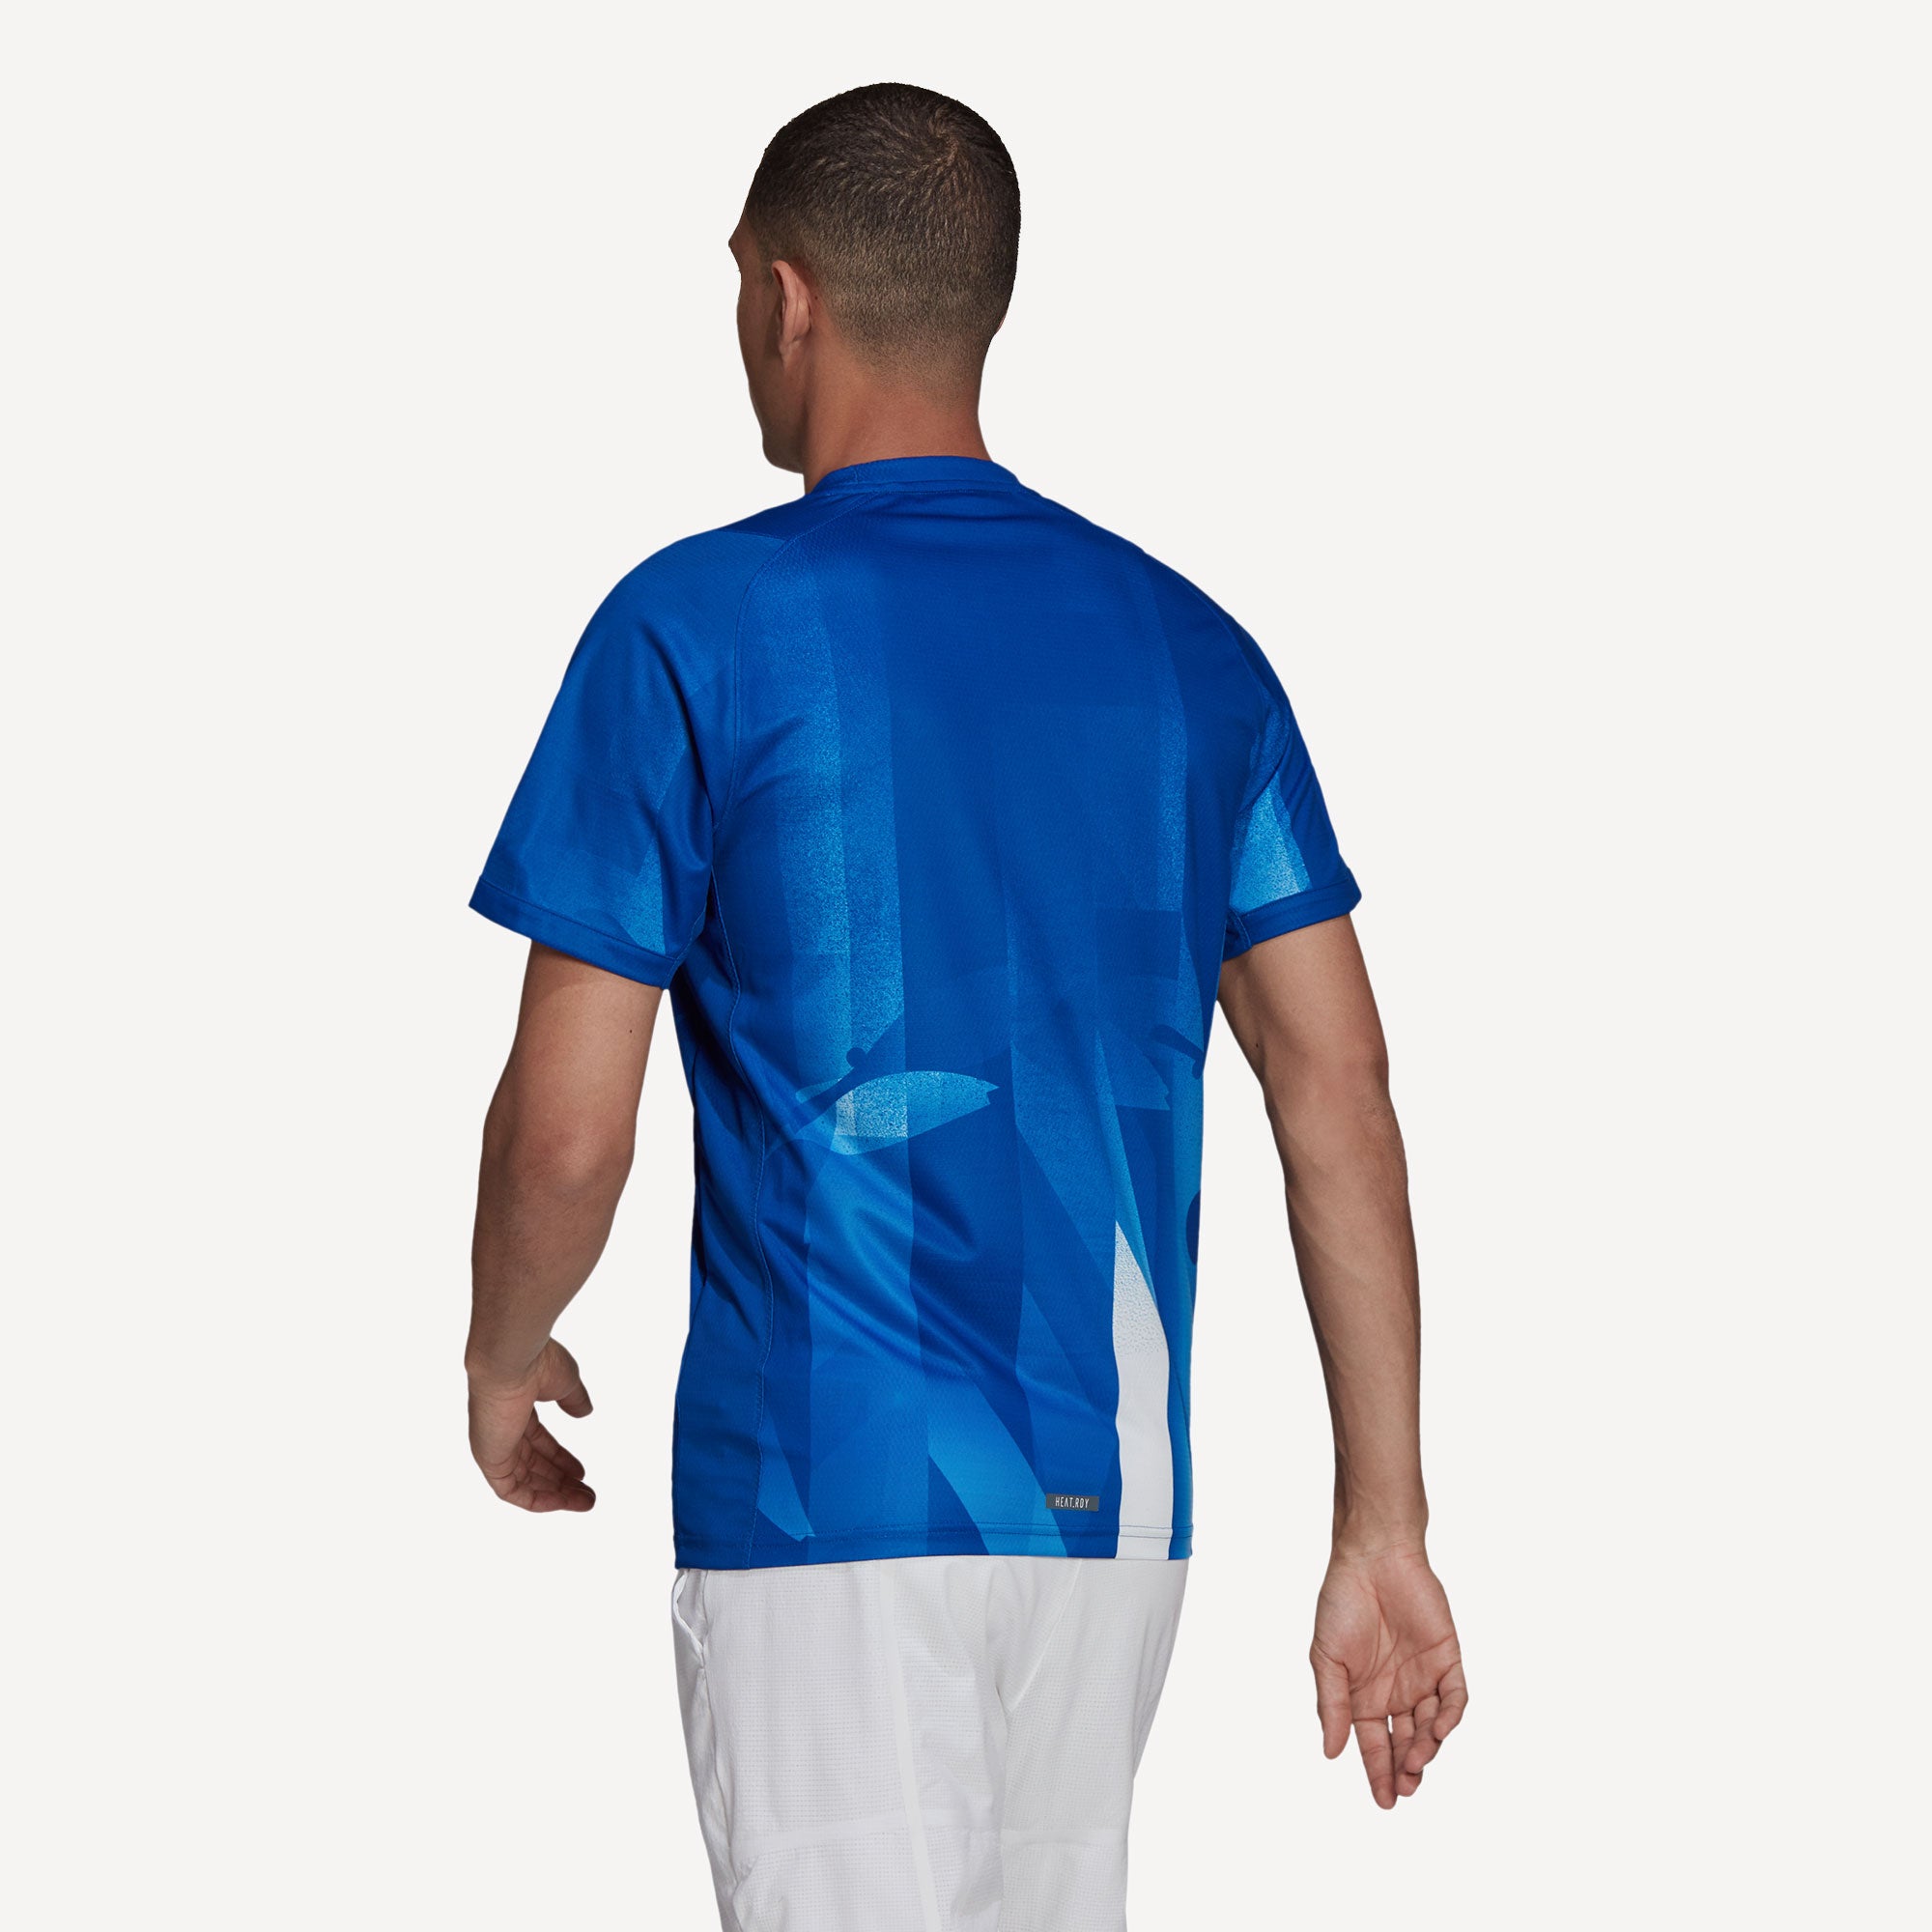 adidas Freelift Tokyo Primeblue Heat Ready Men's Tennis Shirt Blue(2)